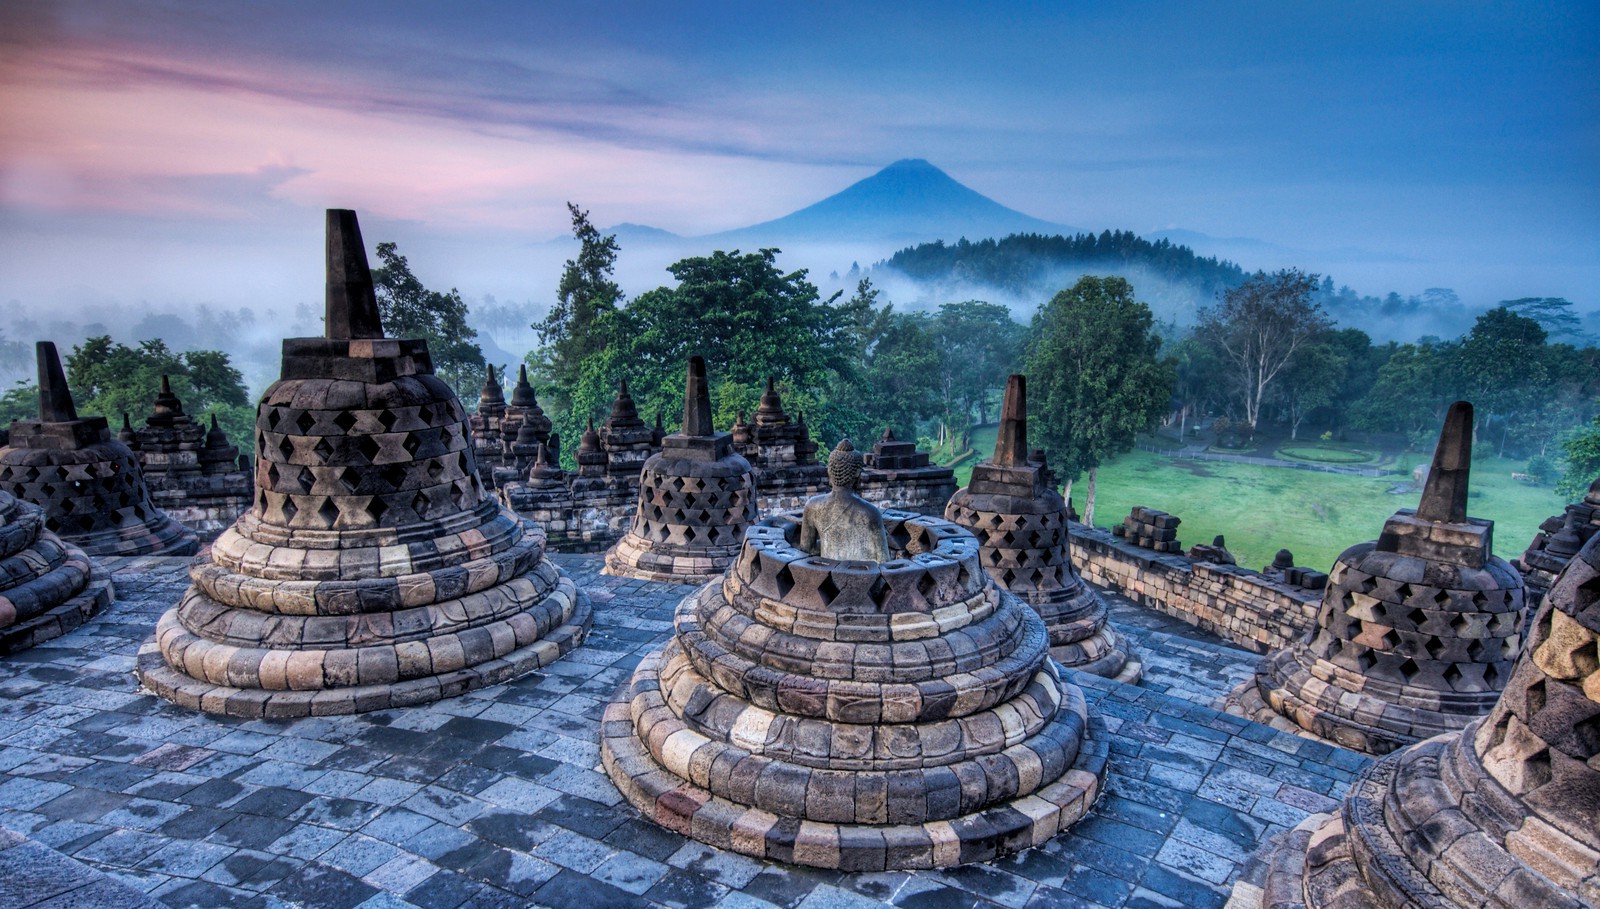 Borobudur, Indonesia, Sunrise, Statue, Buddhism, Forest, Mist, Mountain